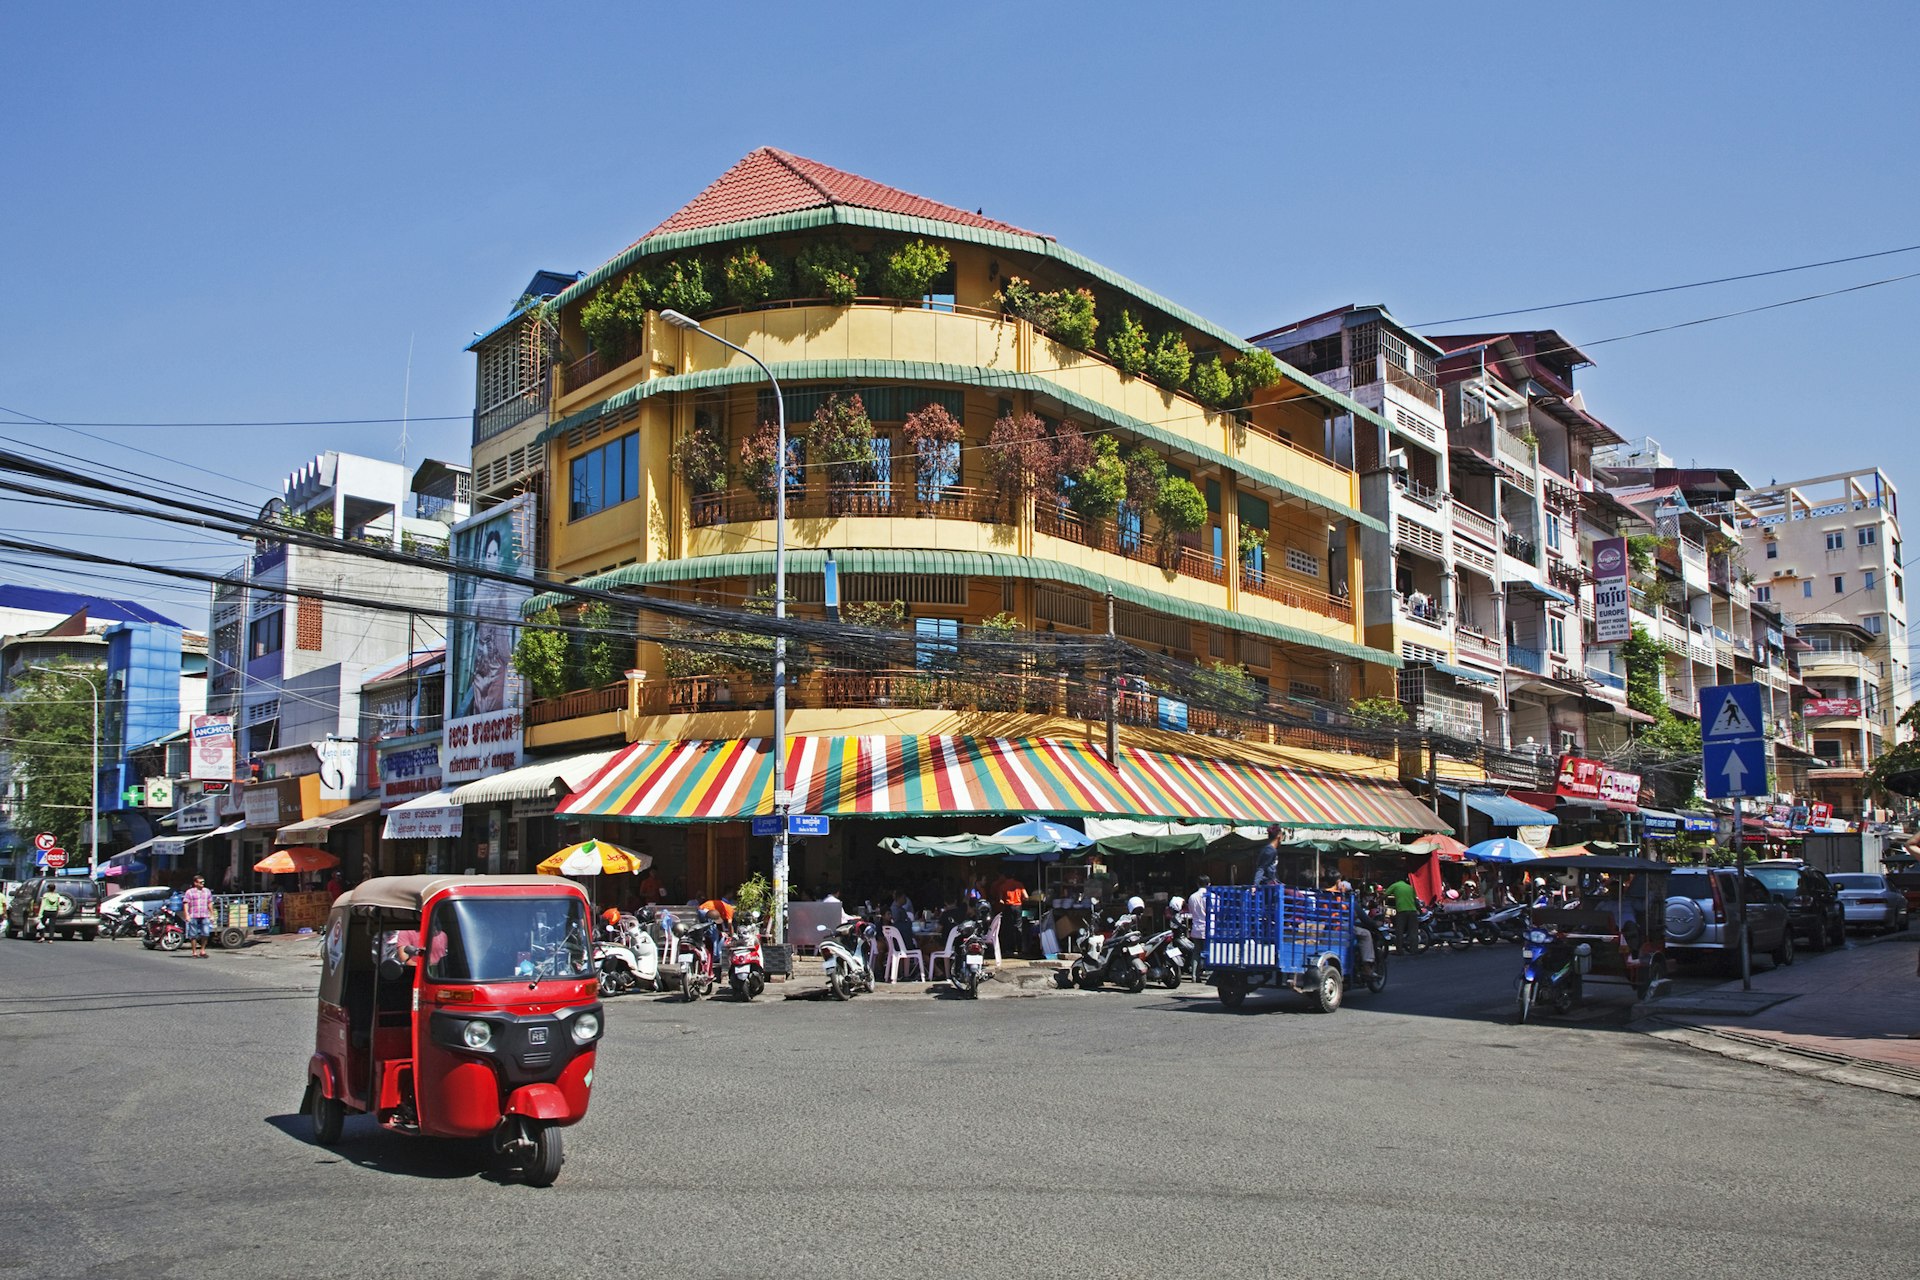 Street scene with tuk tuk cab, Phnom Penh, Cambodia